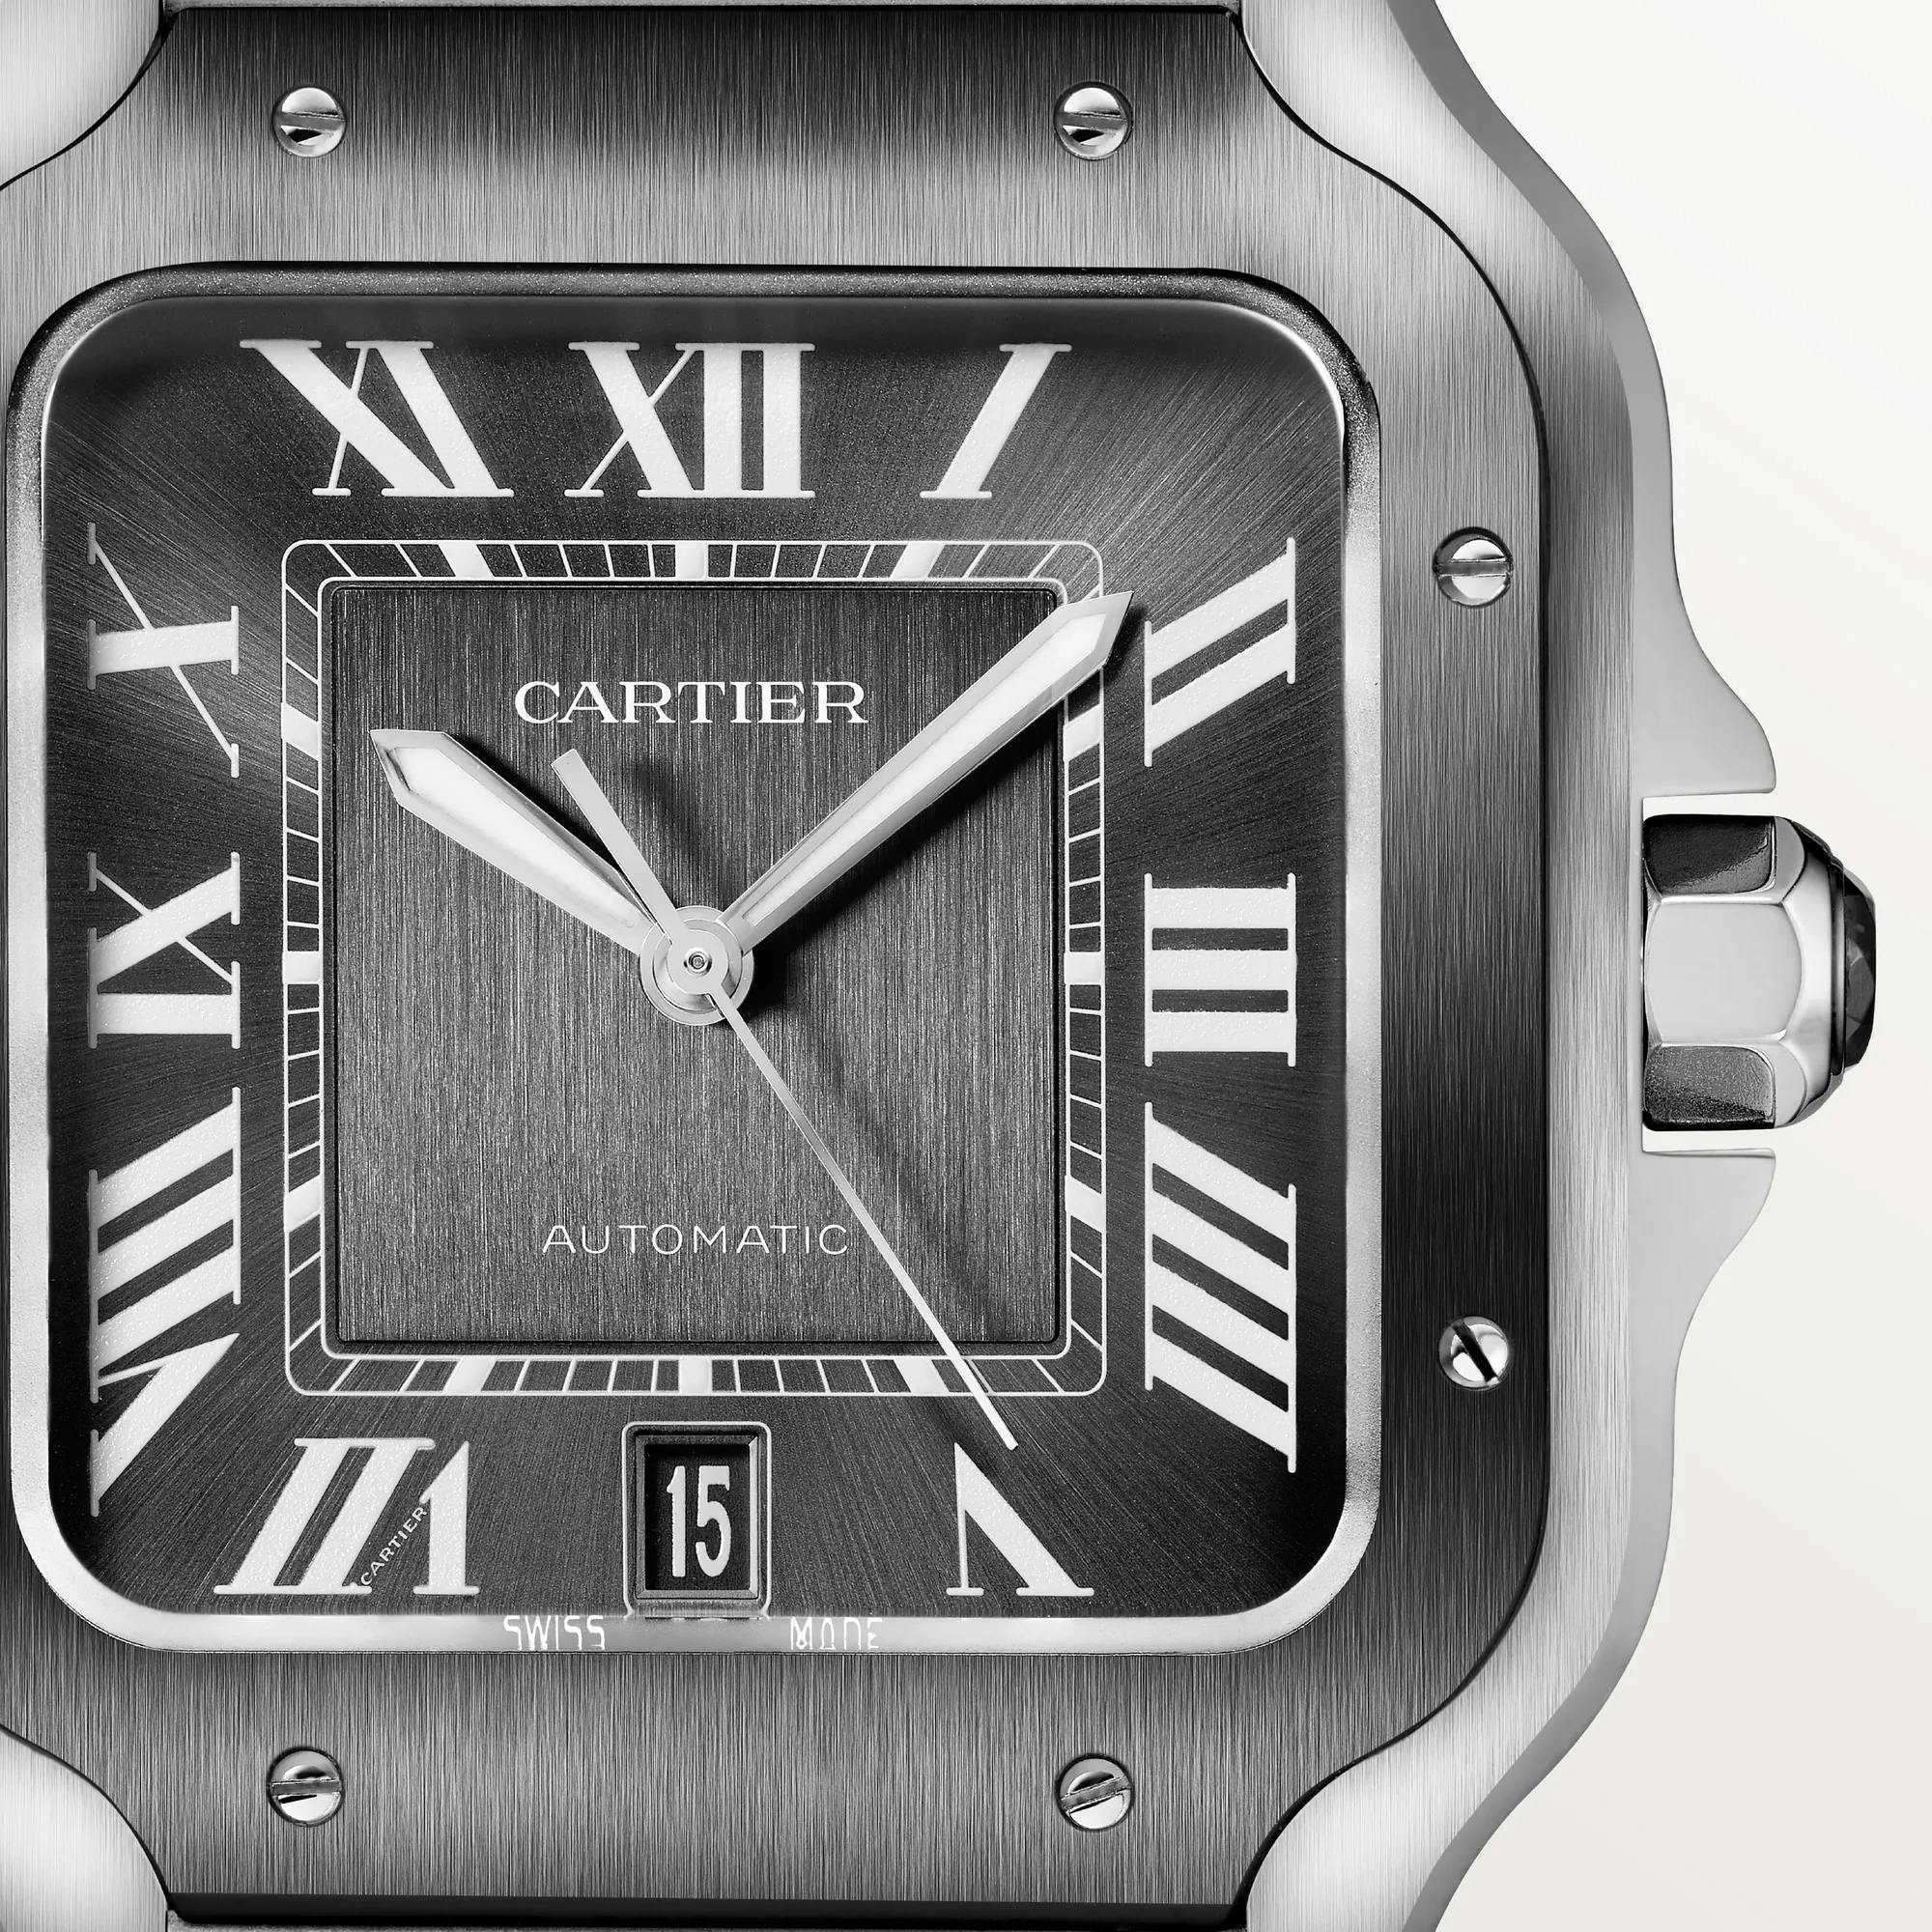 Santos de Cartier Watch with Gray Dial, large model 1